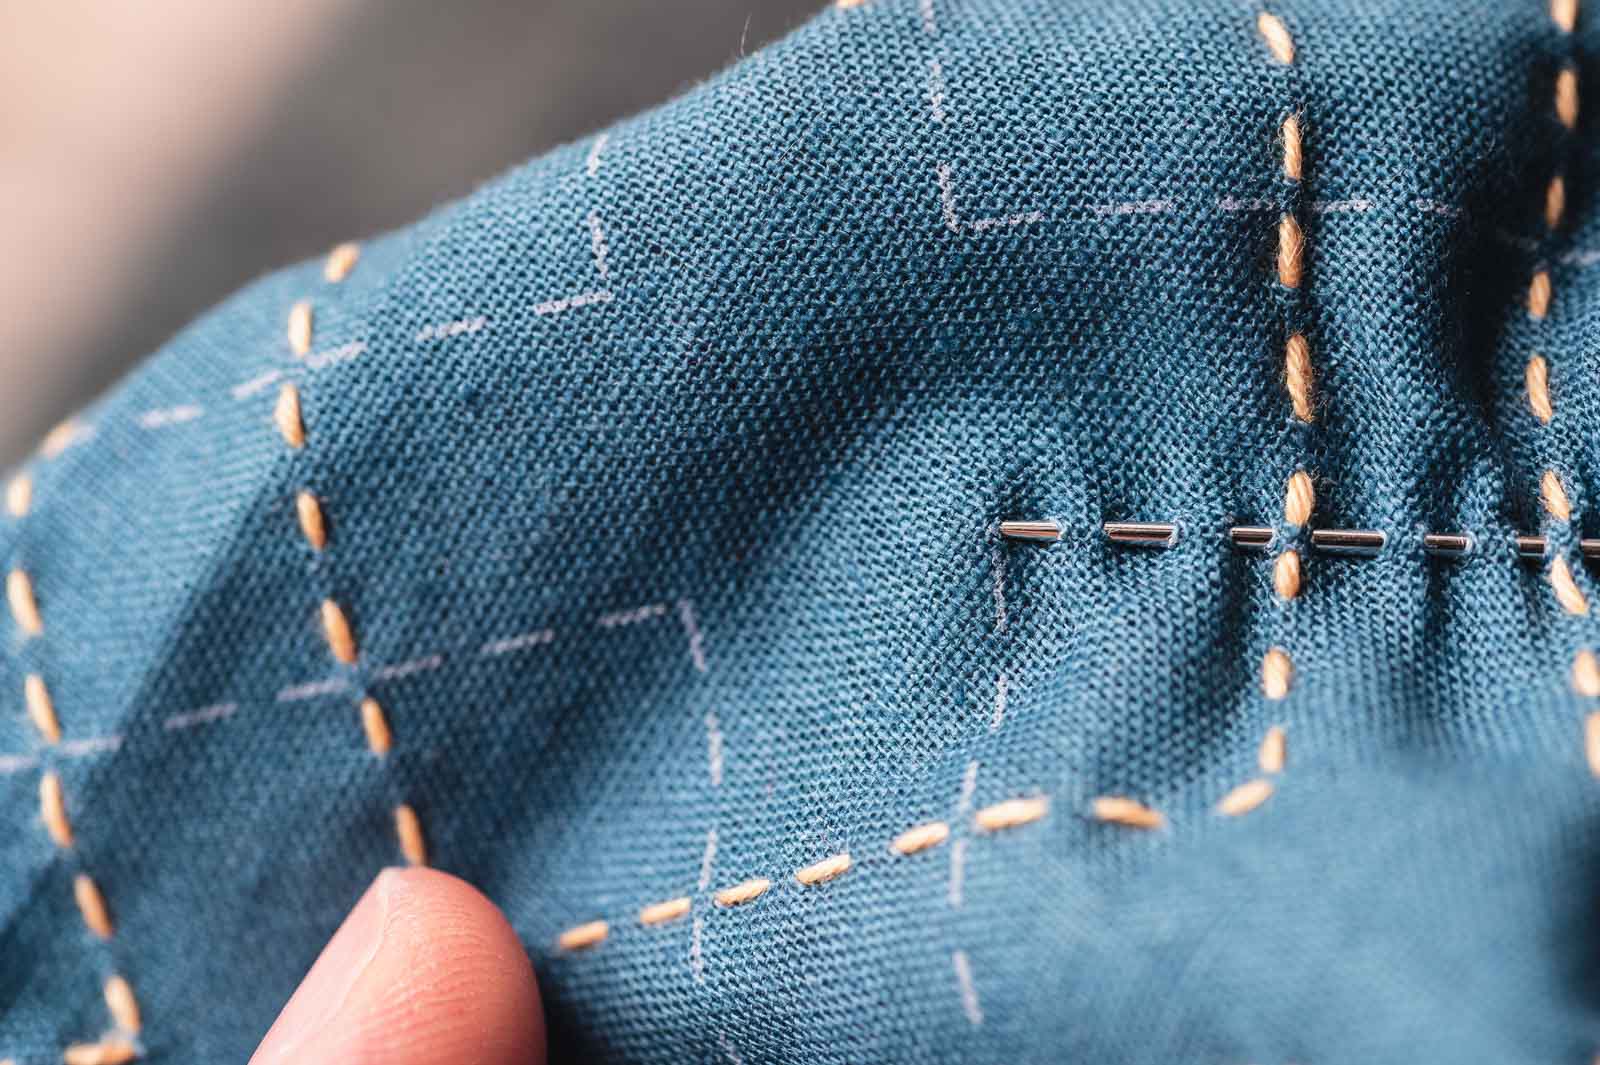 Several sashiko stitches loaded onto a needle